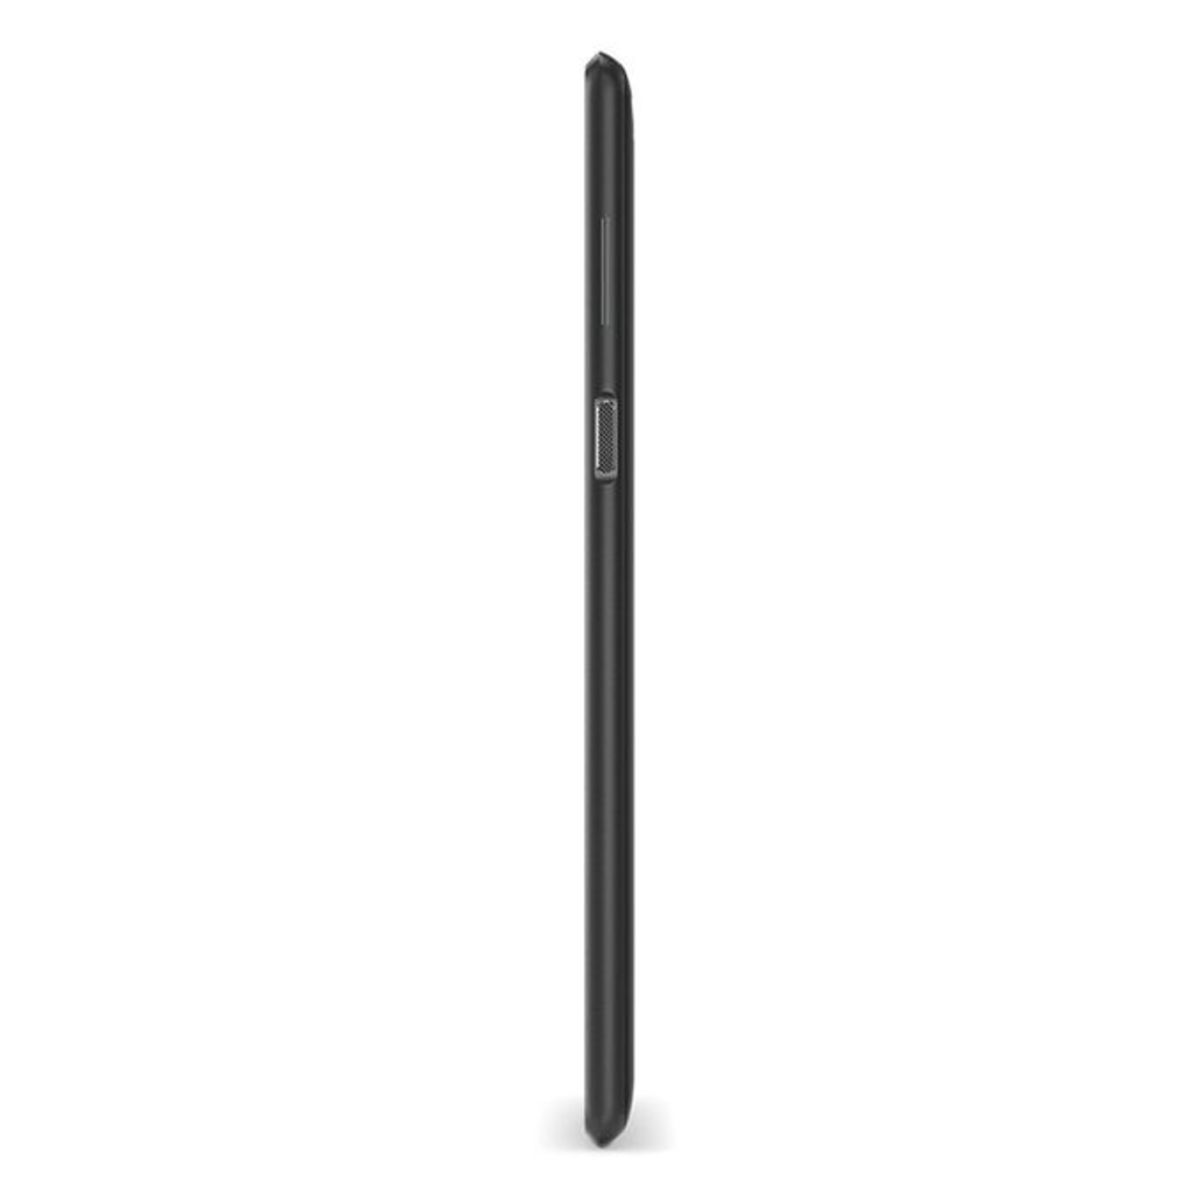 Lenovo Tab4 TB-7104 7inch 8GB 3G Black